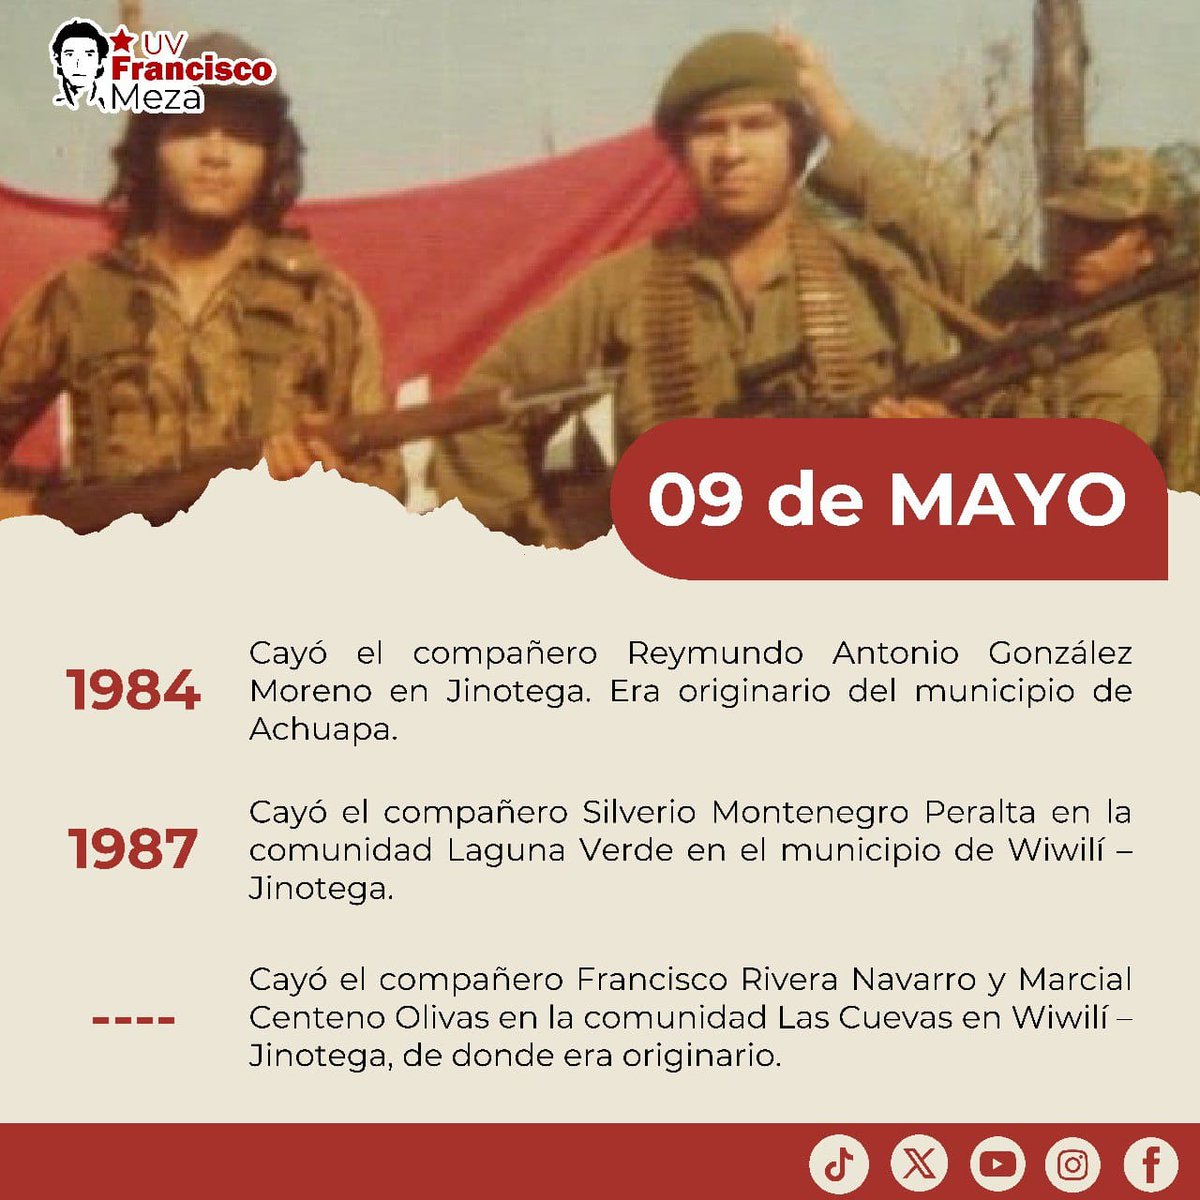 Efemérides de la Revolución Popular Sandinista

#EnDefensaDelFSLN
#SomosUNAN
#4519LaPatriaLaRevolución
#ManaguaSandinista